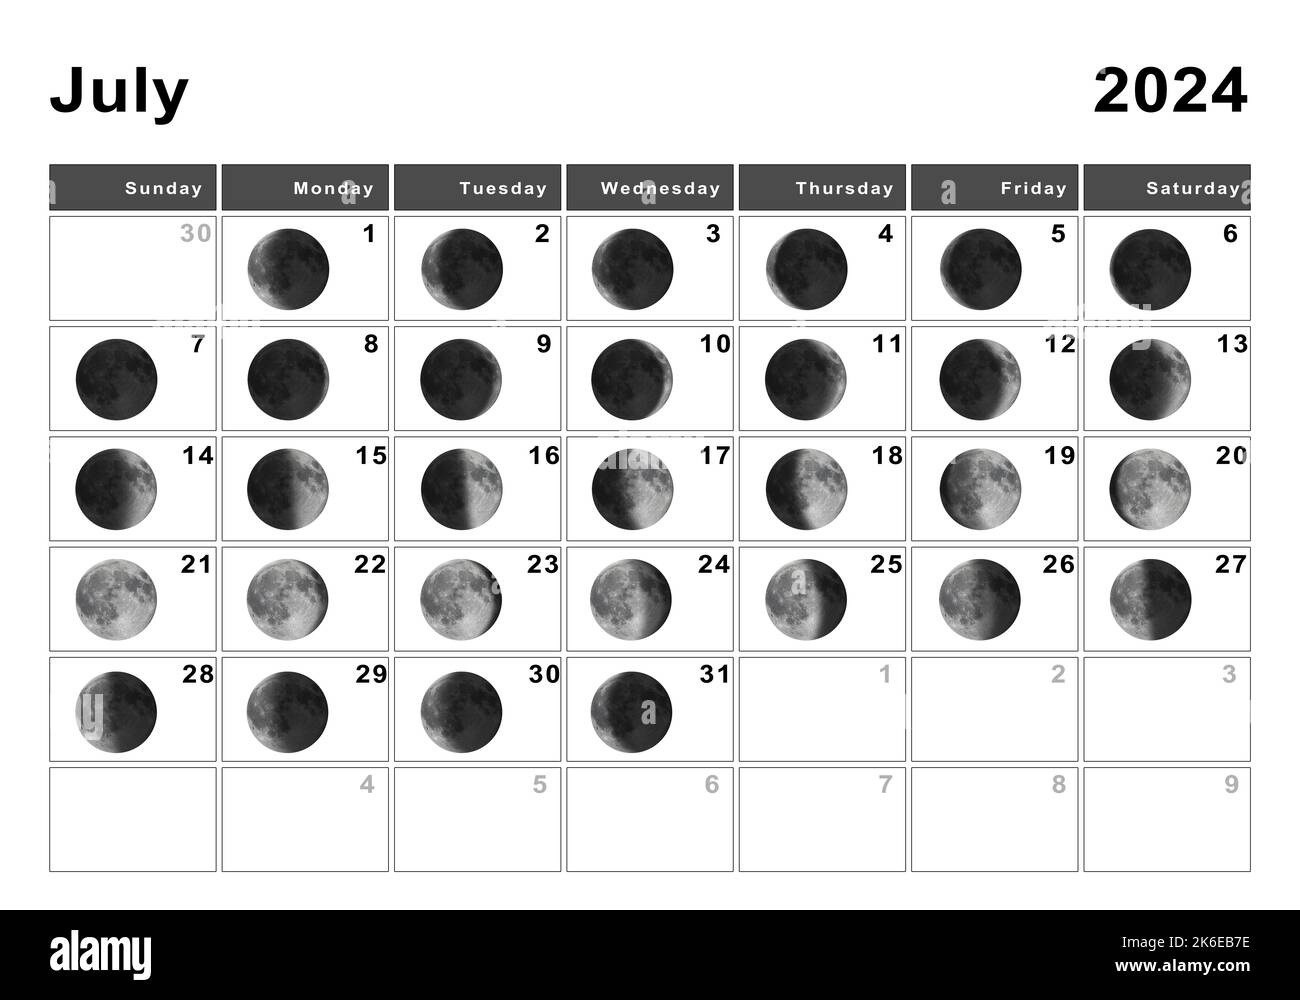 July 2024 Lunar Calendar, Moon Cycles, Moon Phases Stock Photo - Alamy in July 16th Lunar Calendar 2024